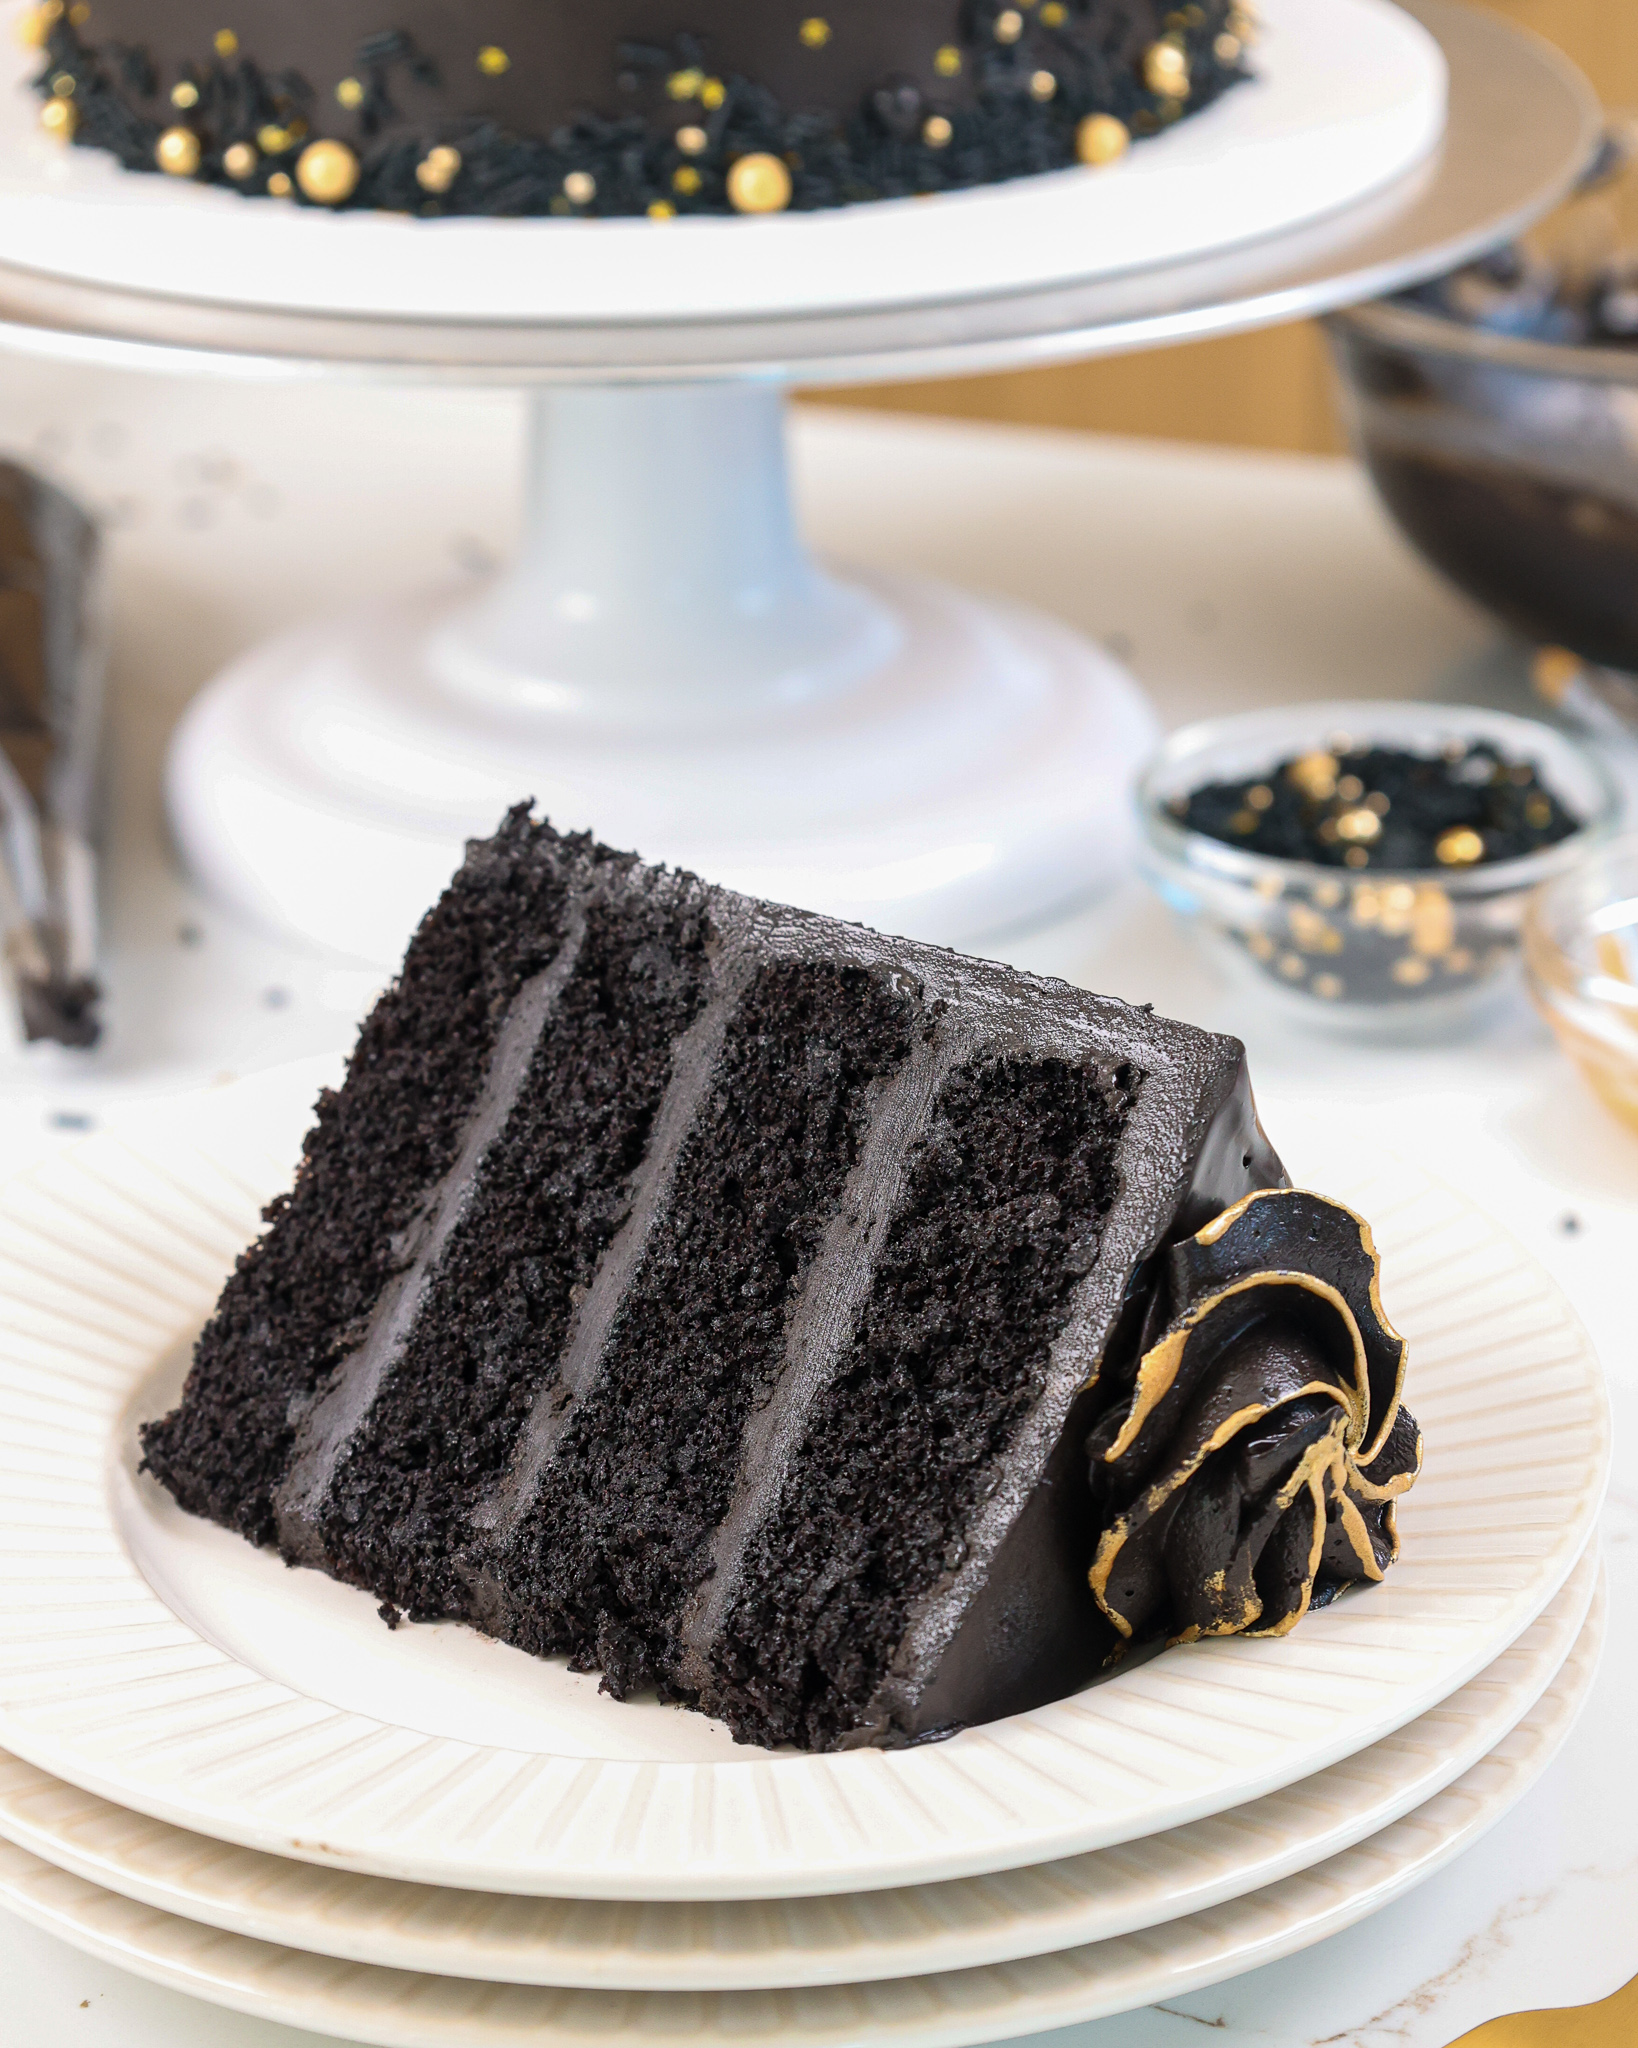 Black Velvet Cake - Delicious, Naturally Colored Recipe